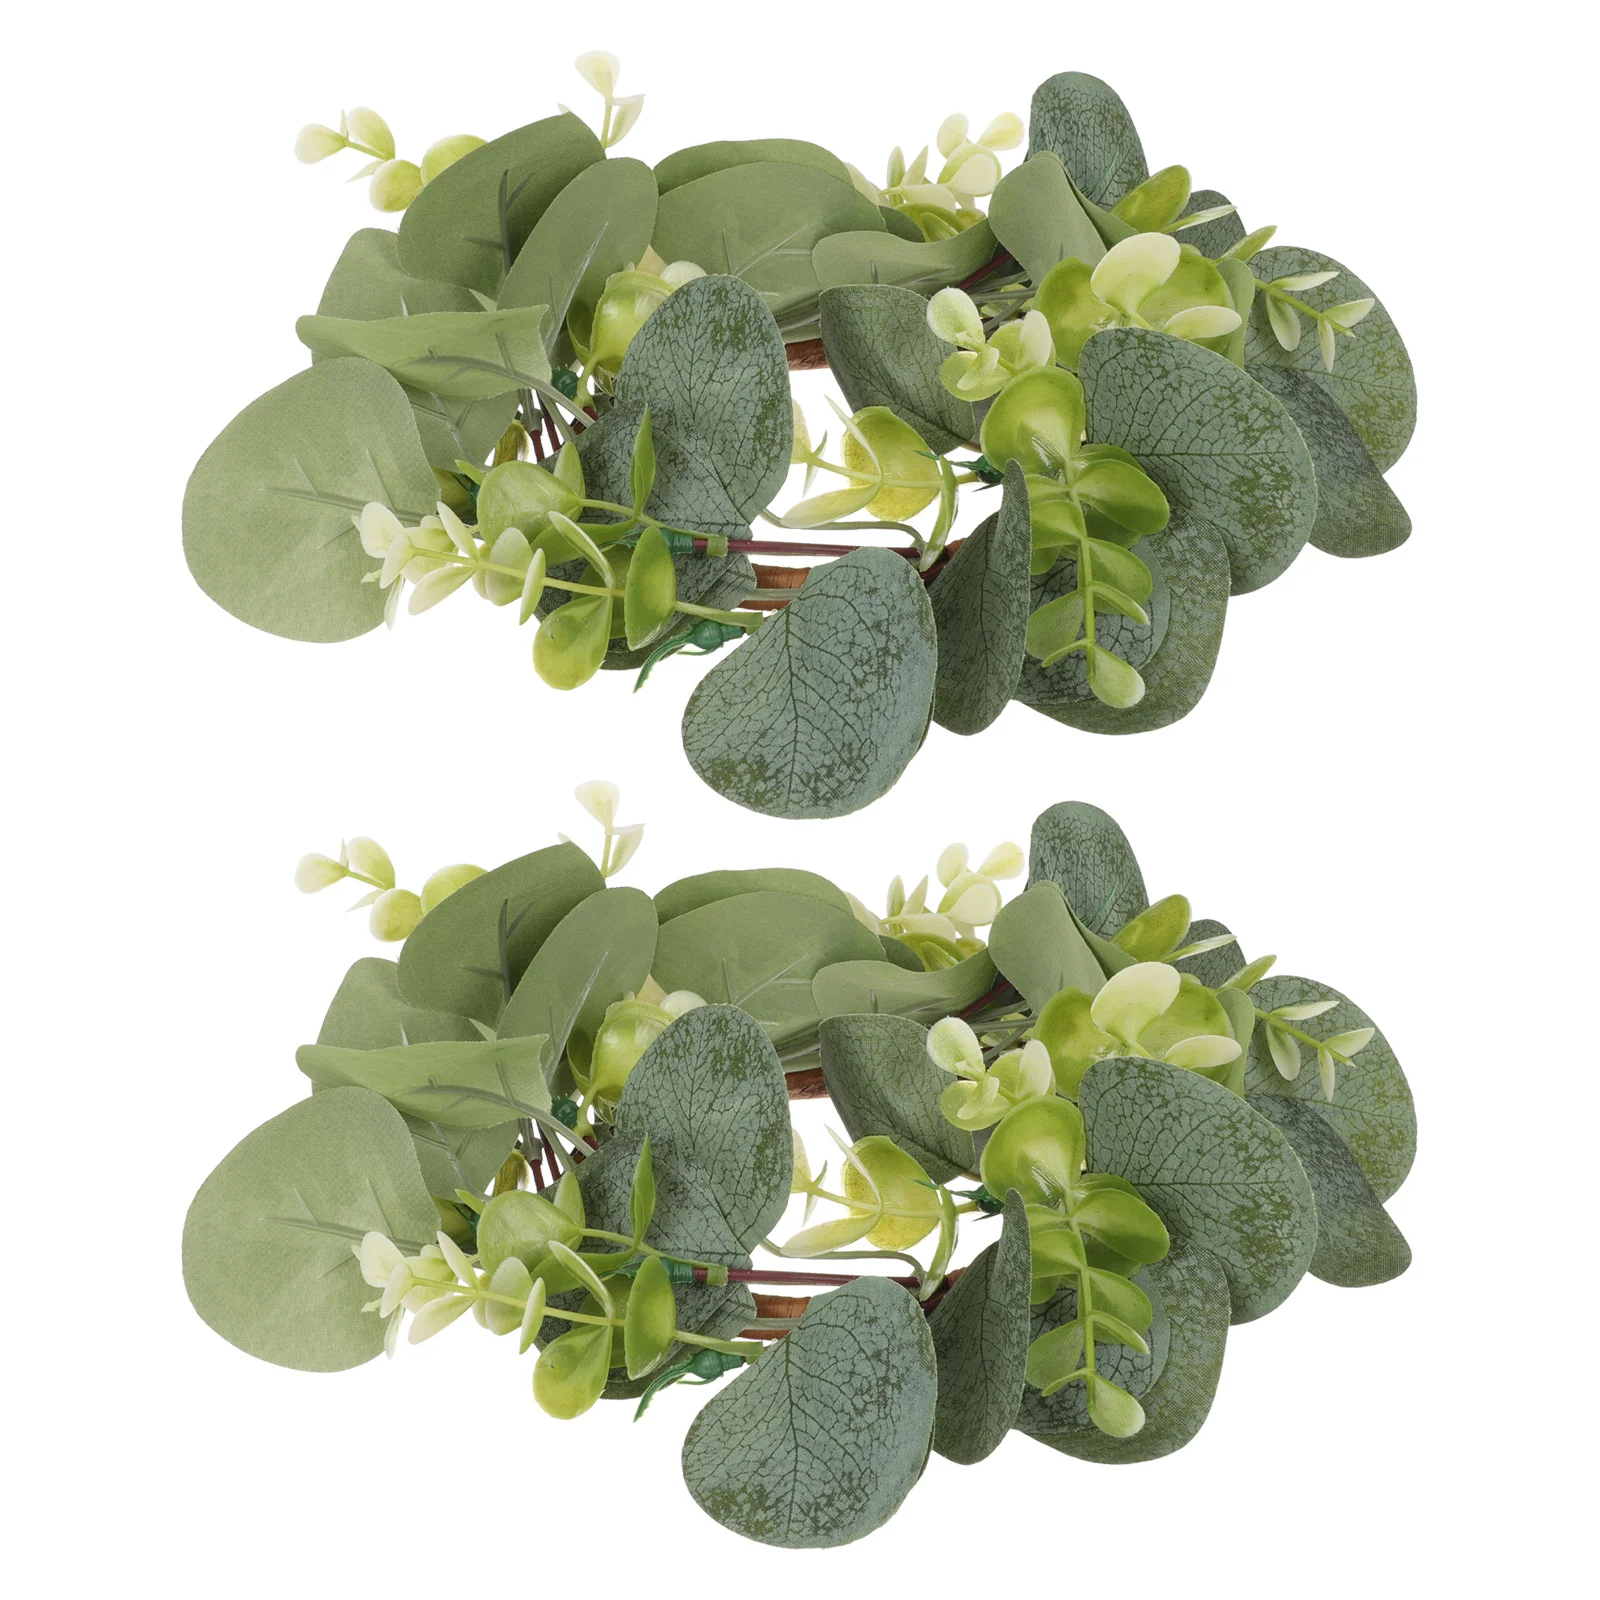 

Wreath Eucalyptus Rings Ring Leaves Wreaths Artificial Pillar Leaf Mini Greenery Holder Wedding Garland Fall Decorative Green